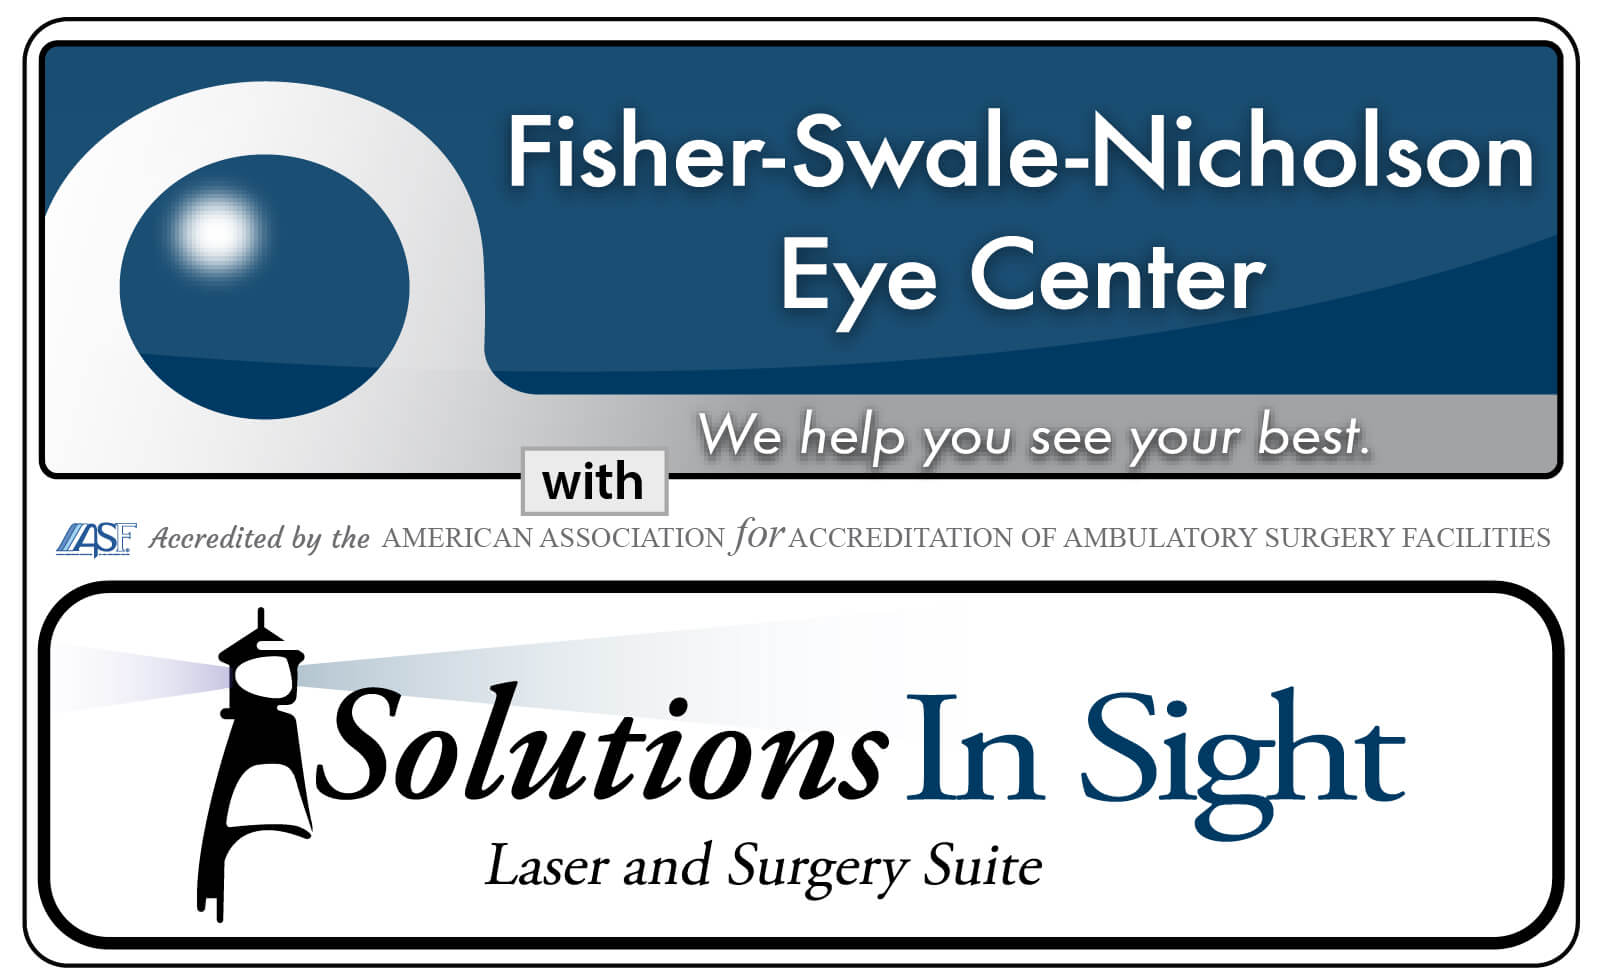 Fisher-Swale-Nicolson eye center logo